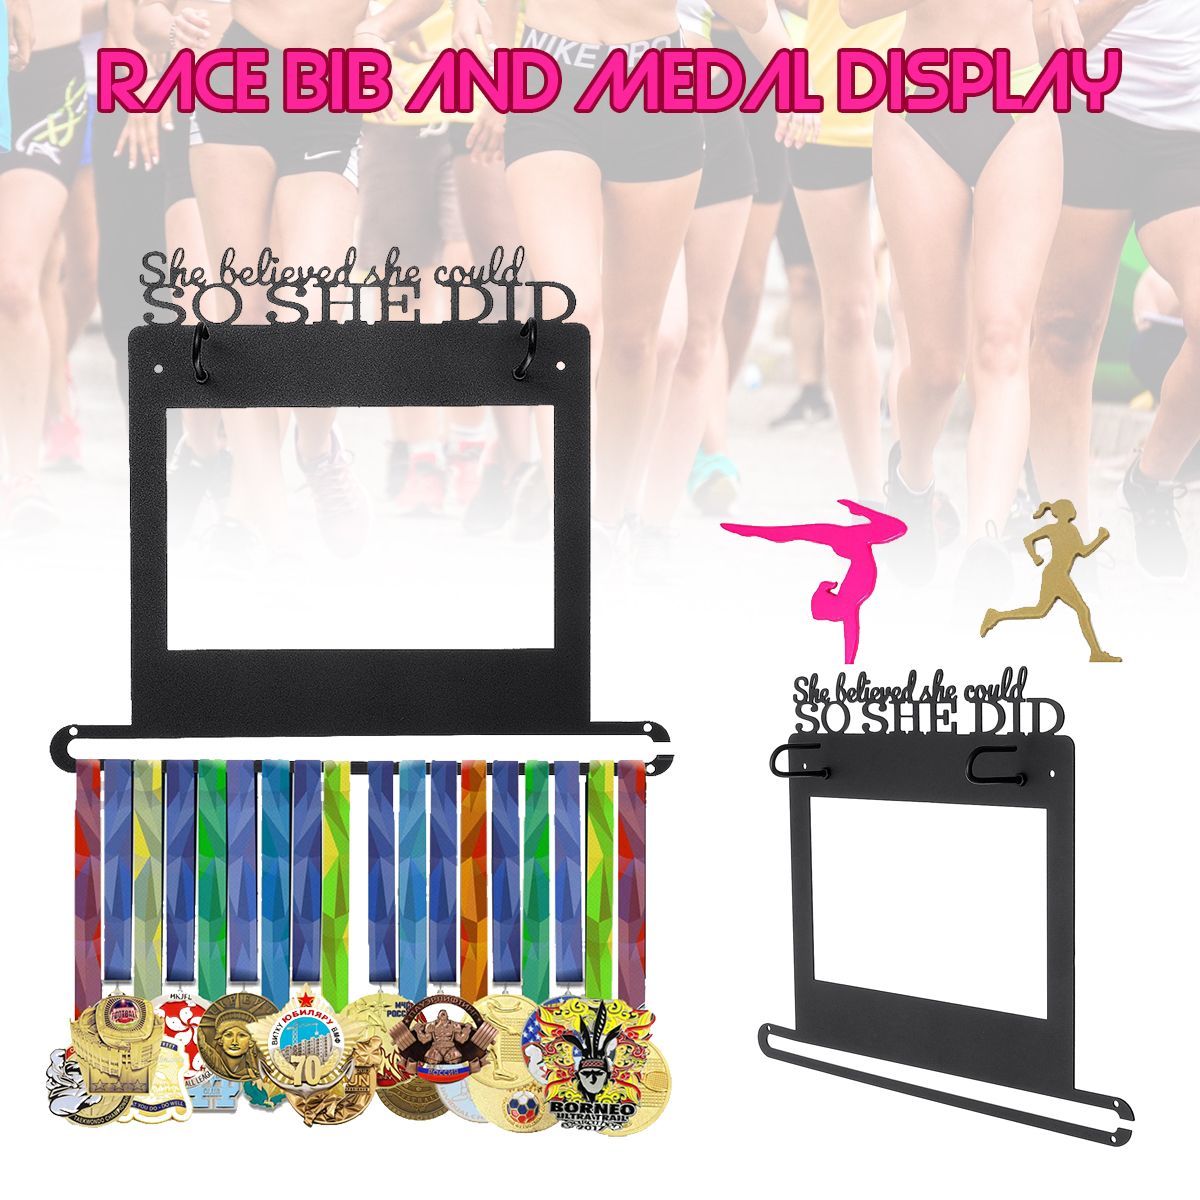 18-Medals-Athletic-Medal-Photo-Display-Hanger-Race-Bib-Holder-for-Sport-Runner-Decorations-1588616